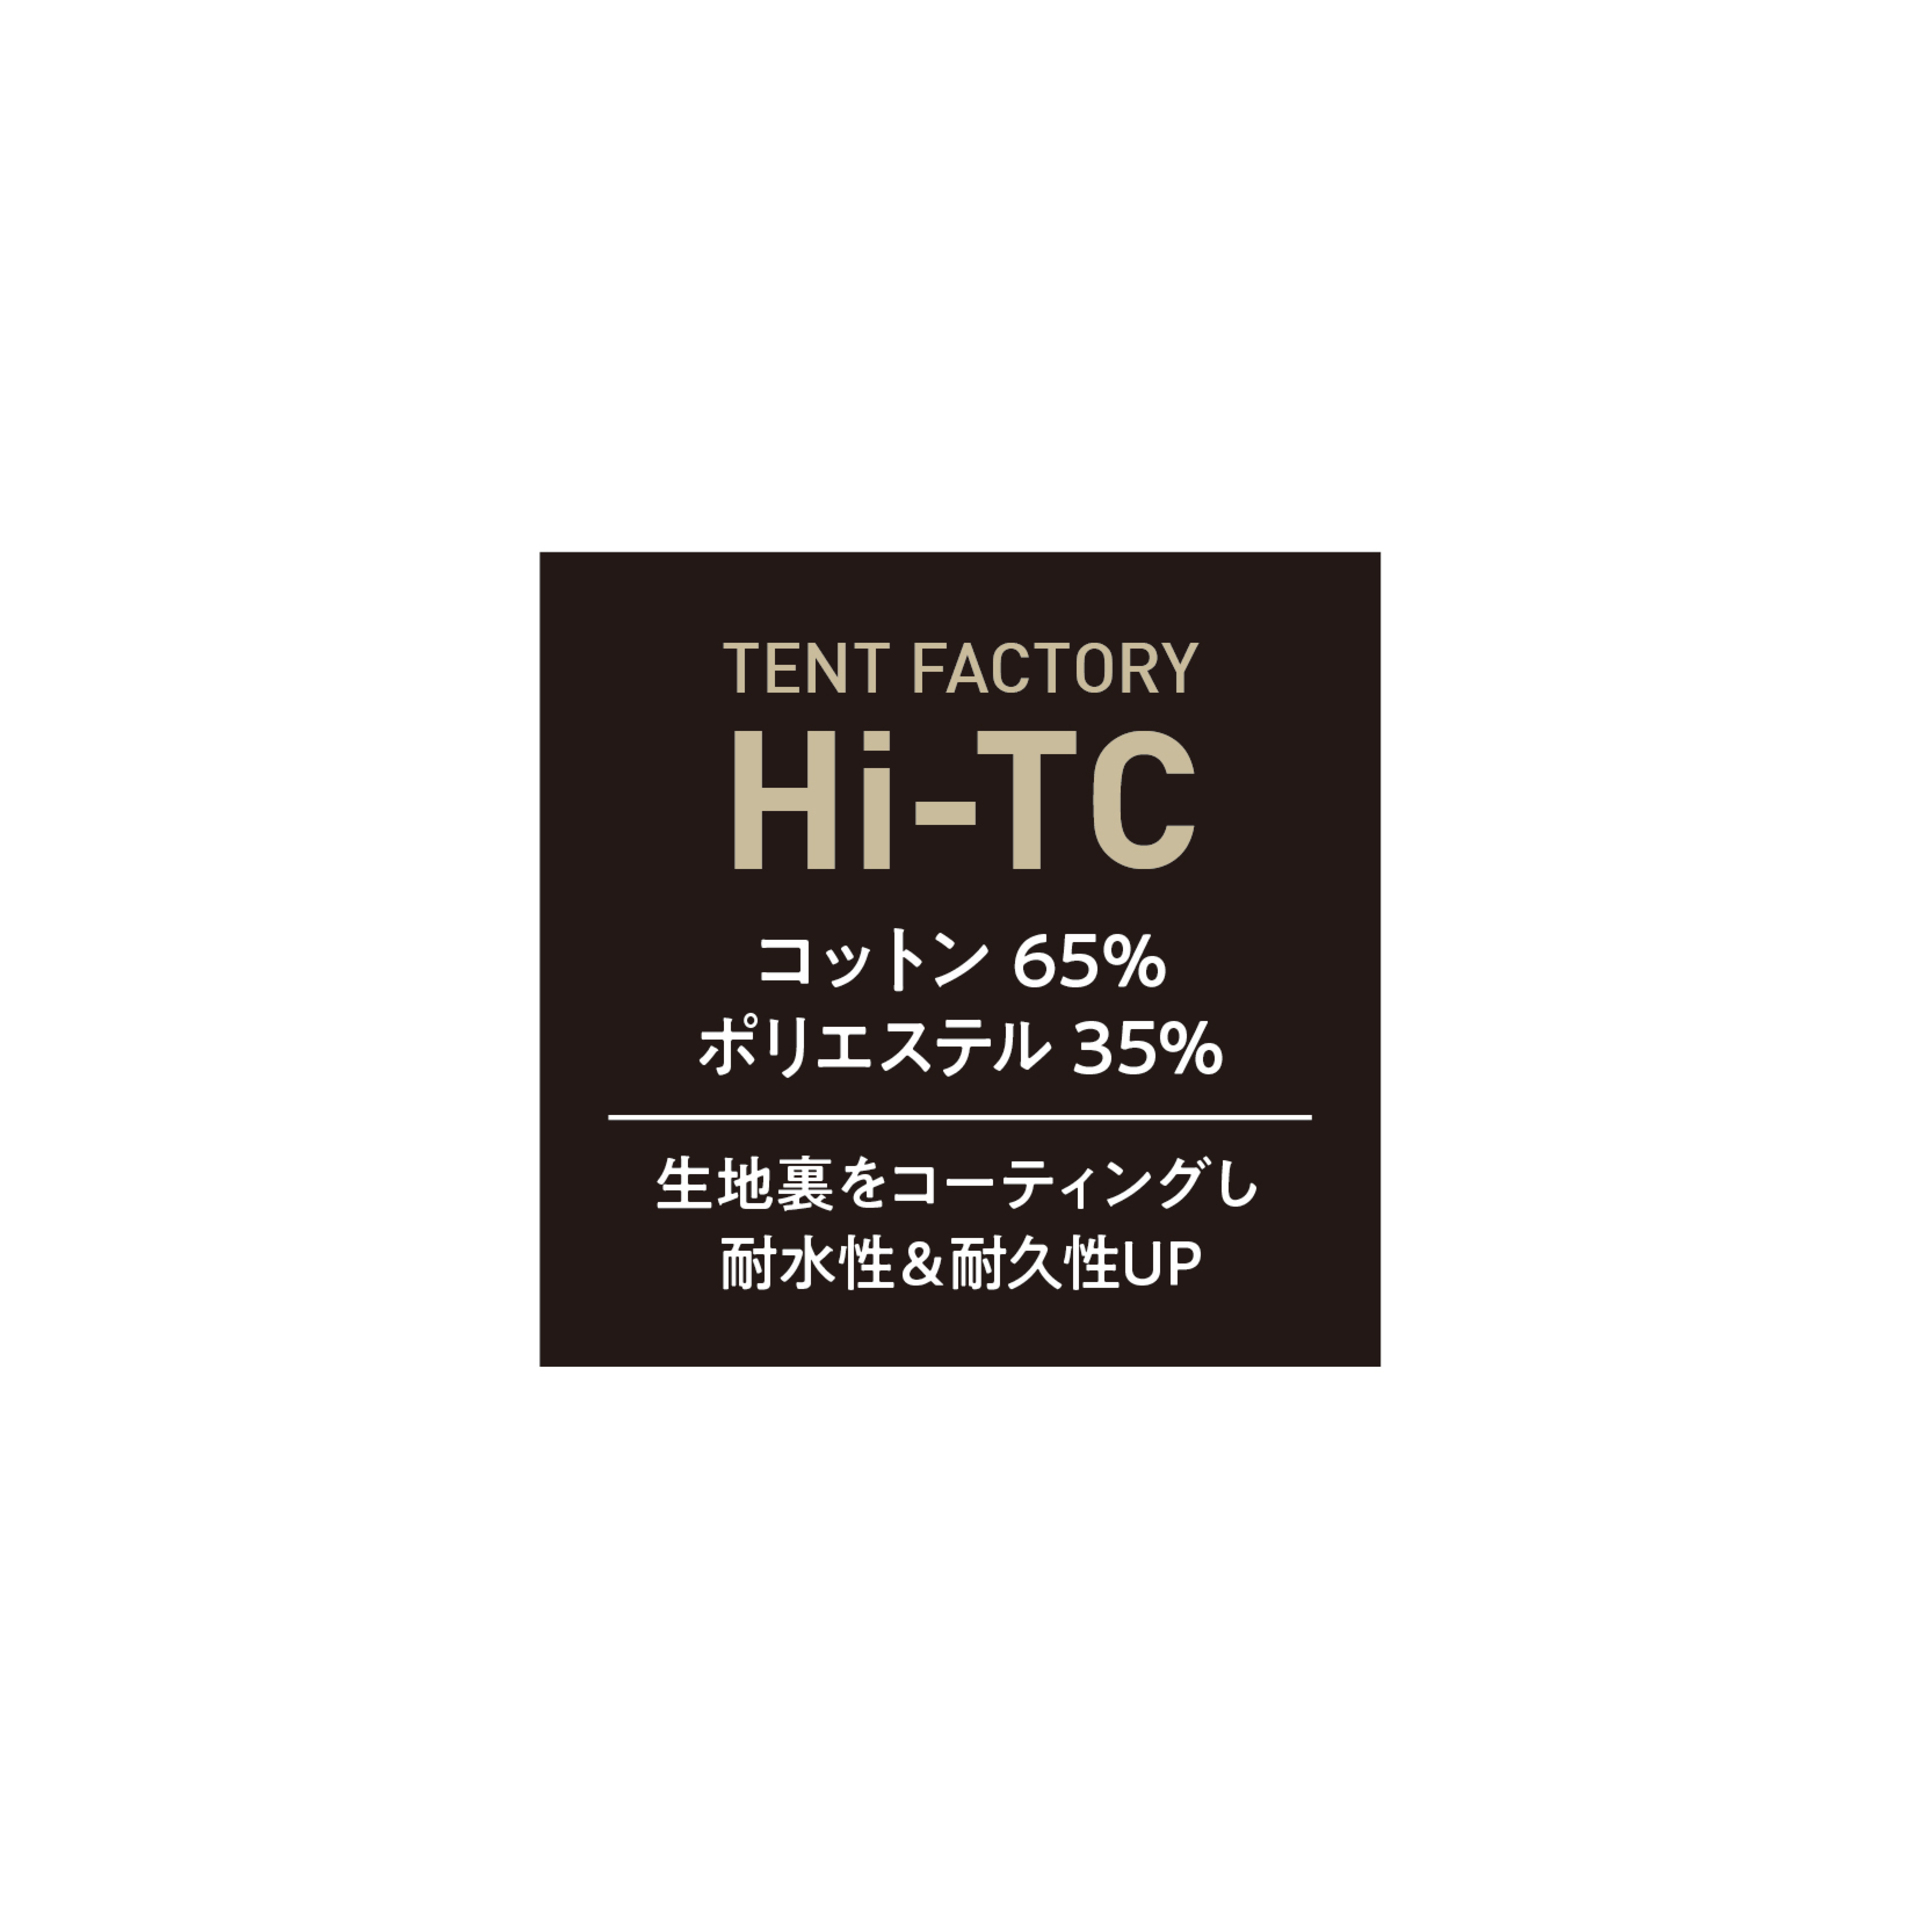 Hi-TC ワイドワンポールテントR1 